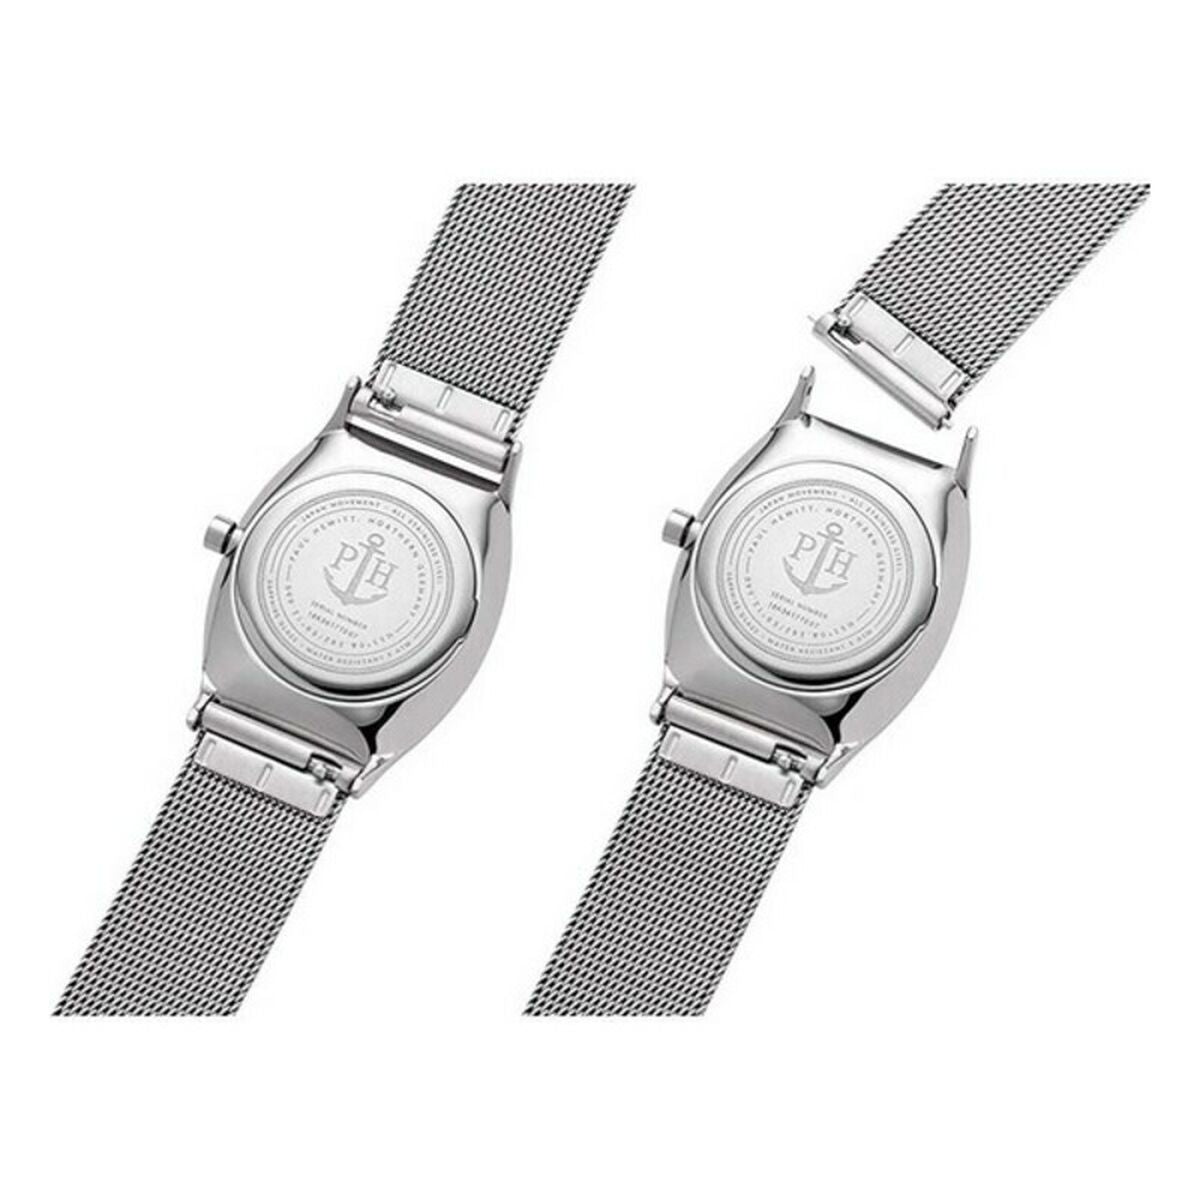 Horloge Dames Paul Hewitt ph-t-s-bs-4s (Ø 30 mm)